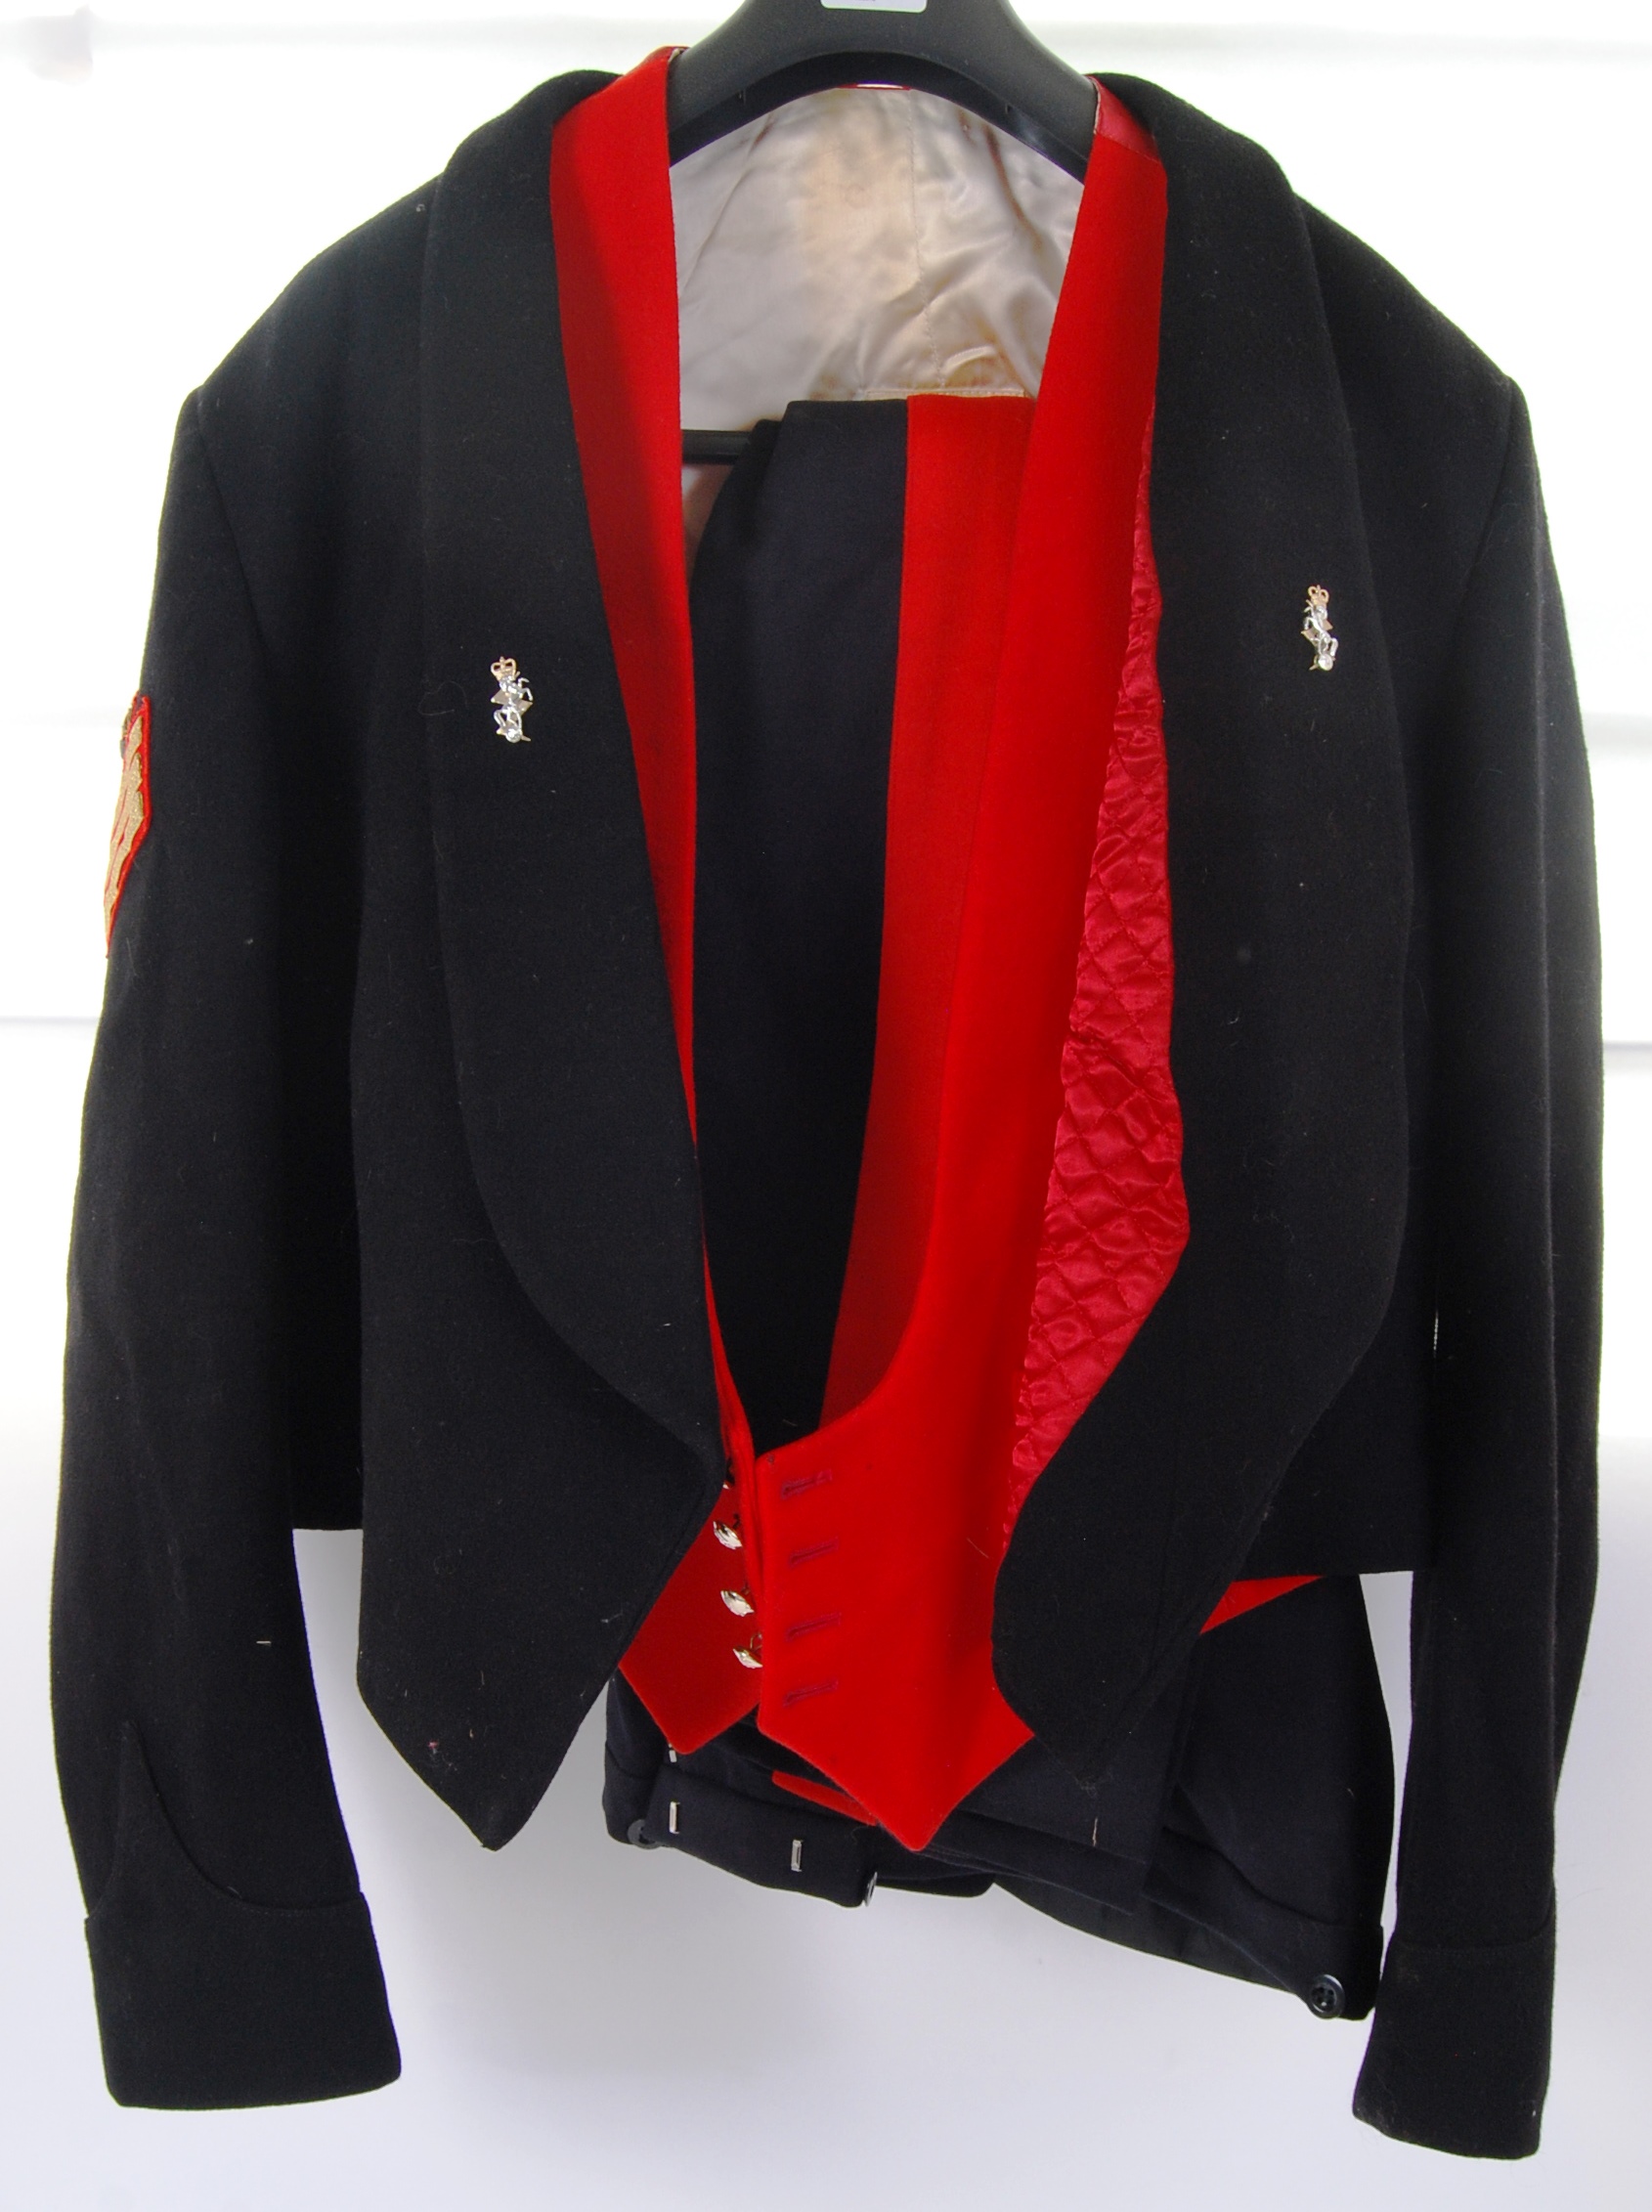 ROYAL SIGNALS: An original military issue Royal Signals Colour Sergeant's dress jacket uniform.